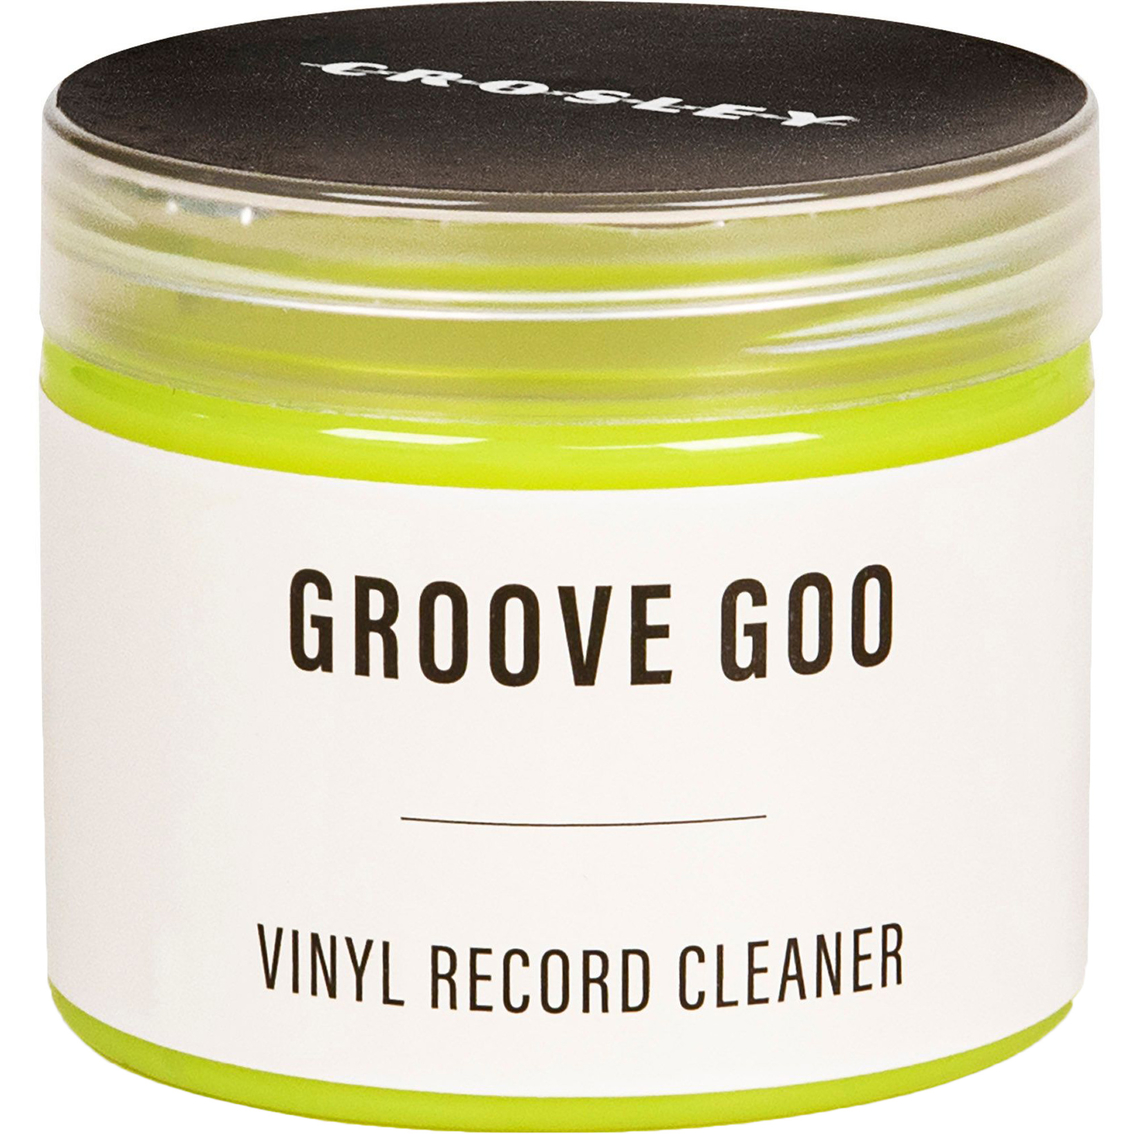 Crosley Groove Goo Vinyl Record Cleaner - Image 3 of 3